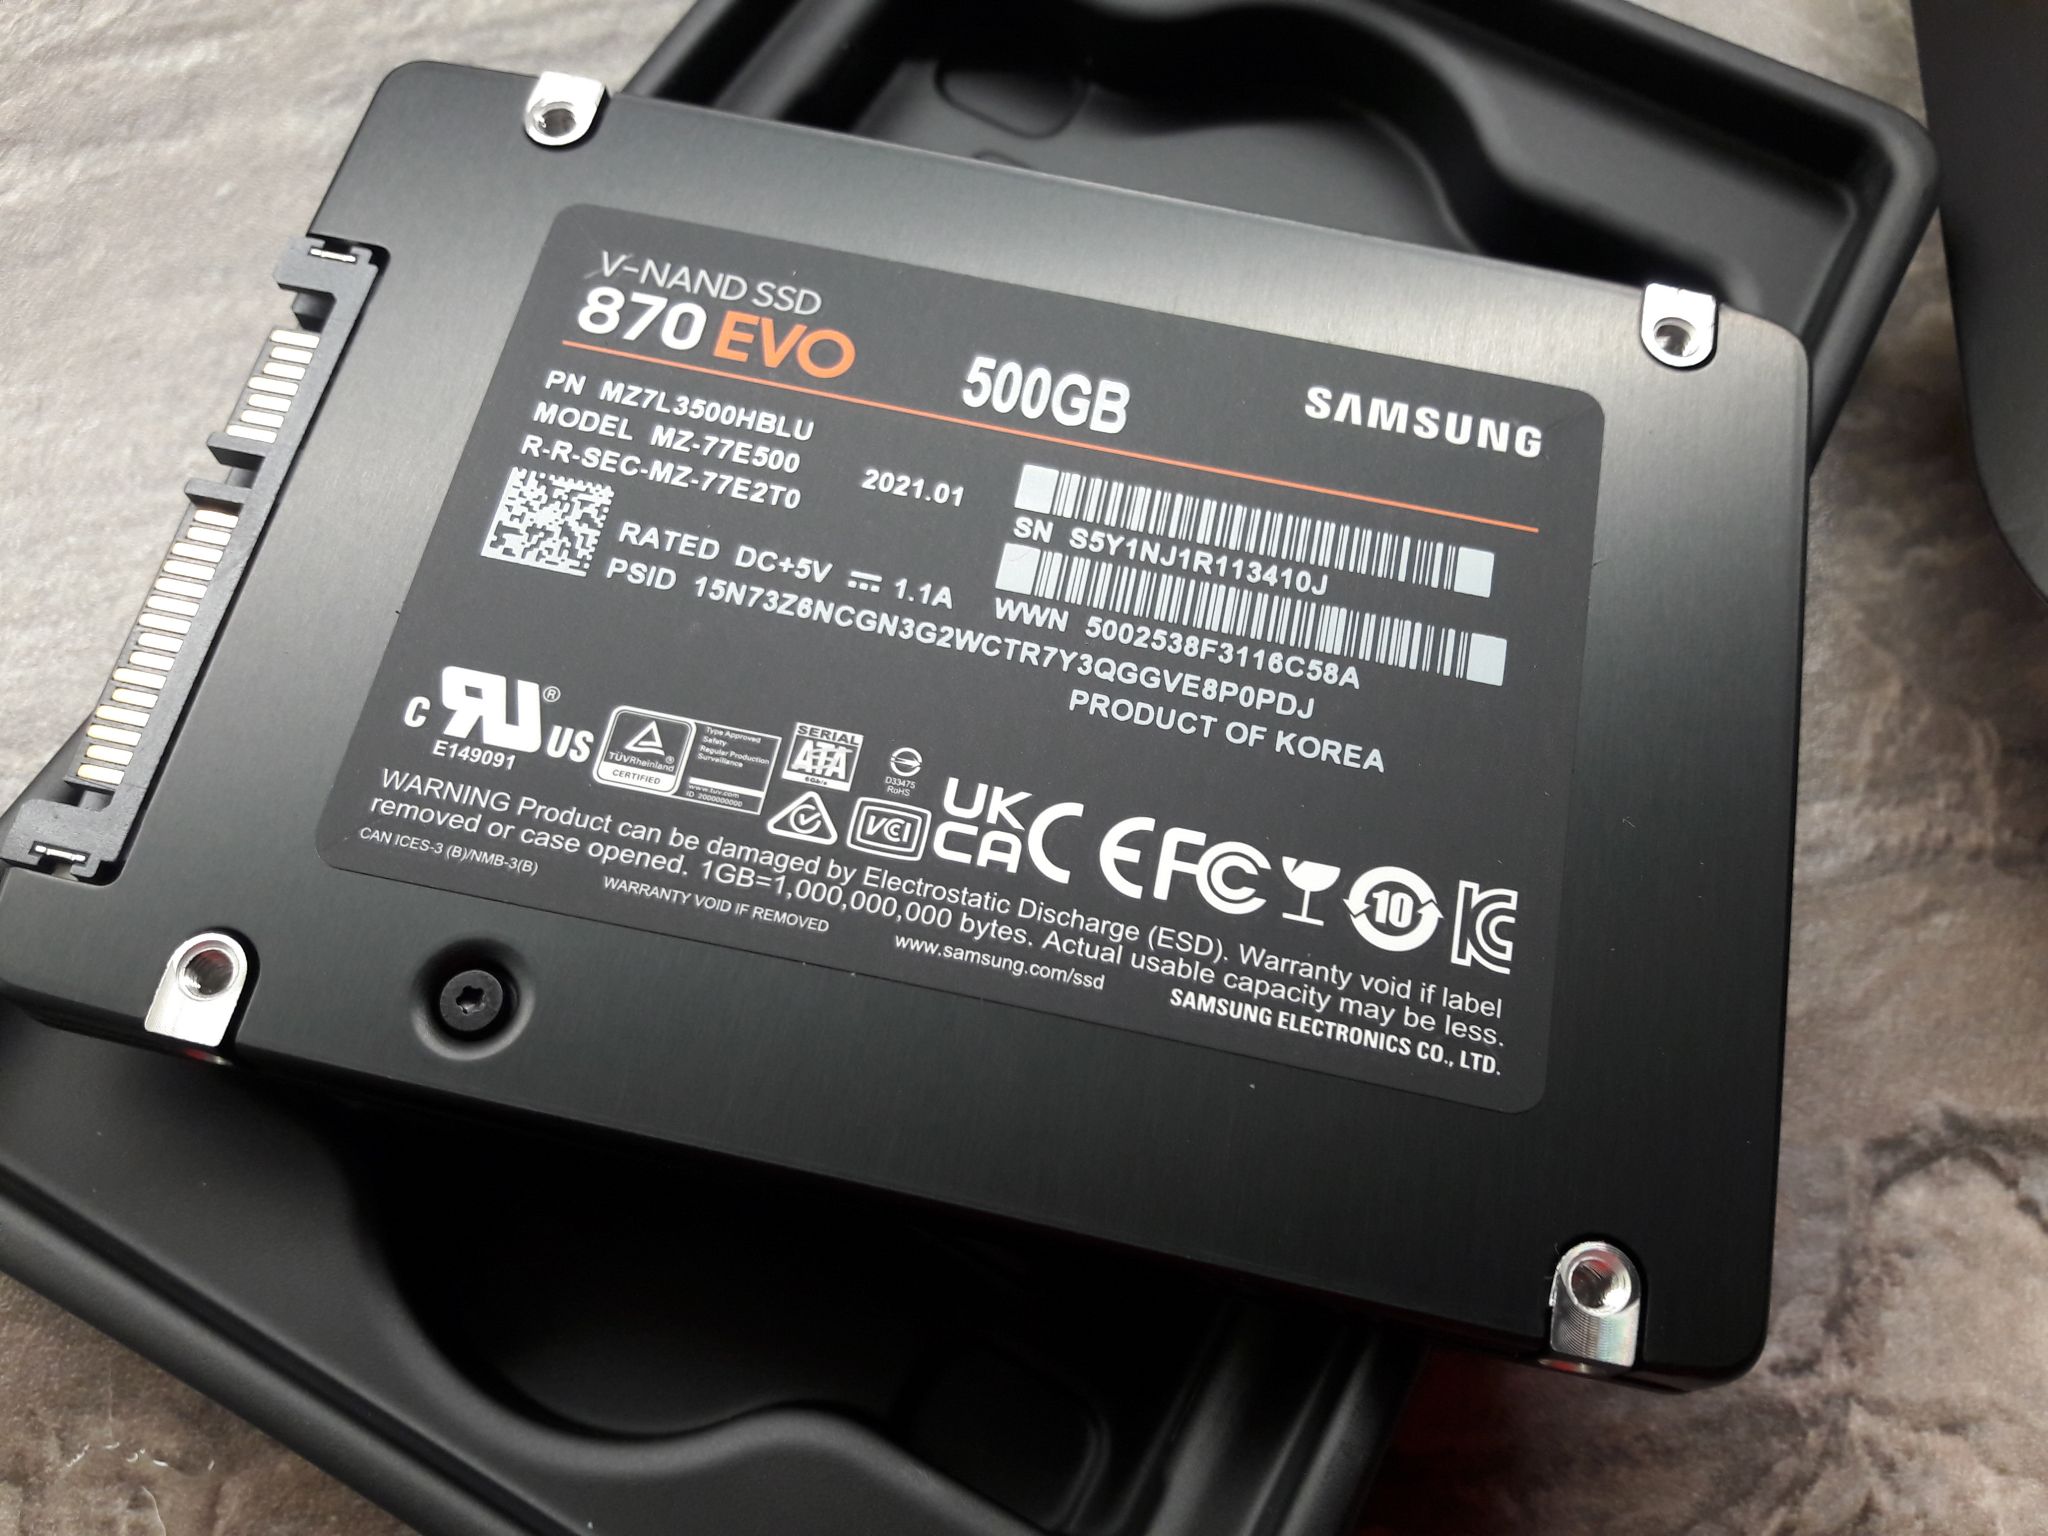 Samsung sata 870 evo купить. Samsung SSD 870 EVO 500. Накопитель Samsung SSD 500gb 870 EVO MZ-77e500b/kr (sata3). SSD накопитель Samsung 870 500gb. SSD Samsung 870 EVO 500gb.